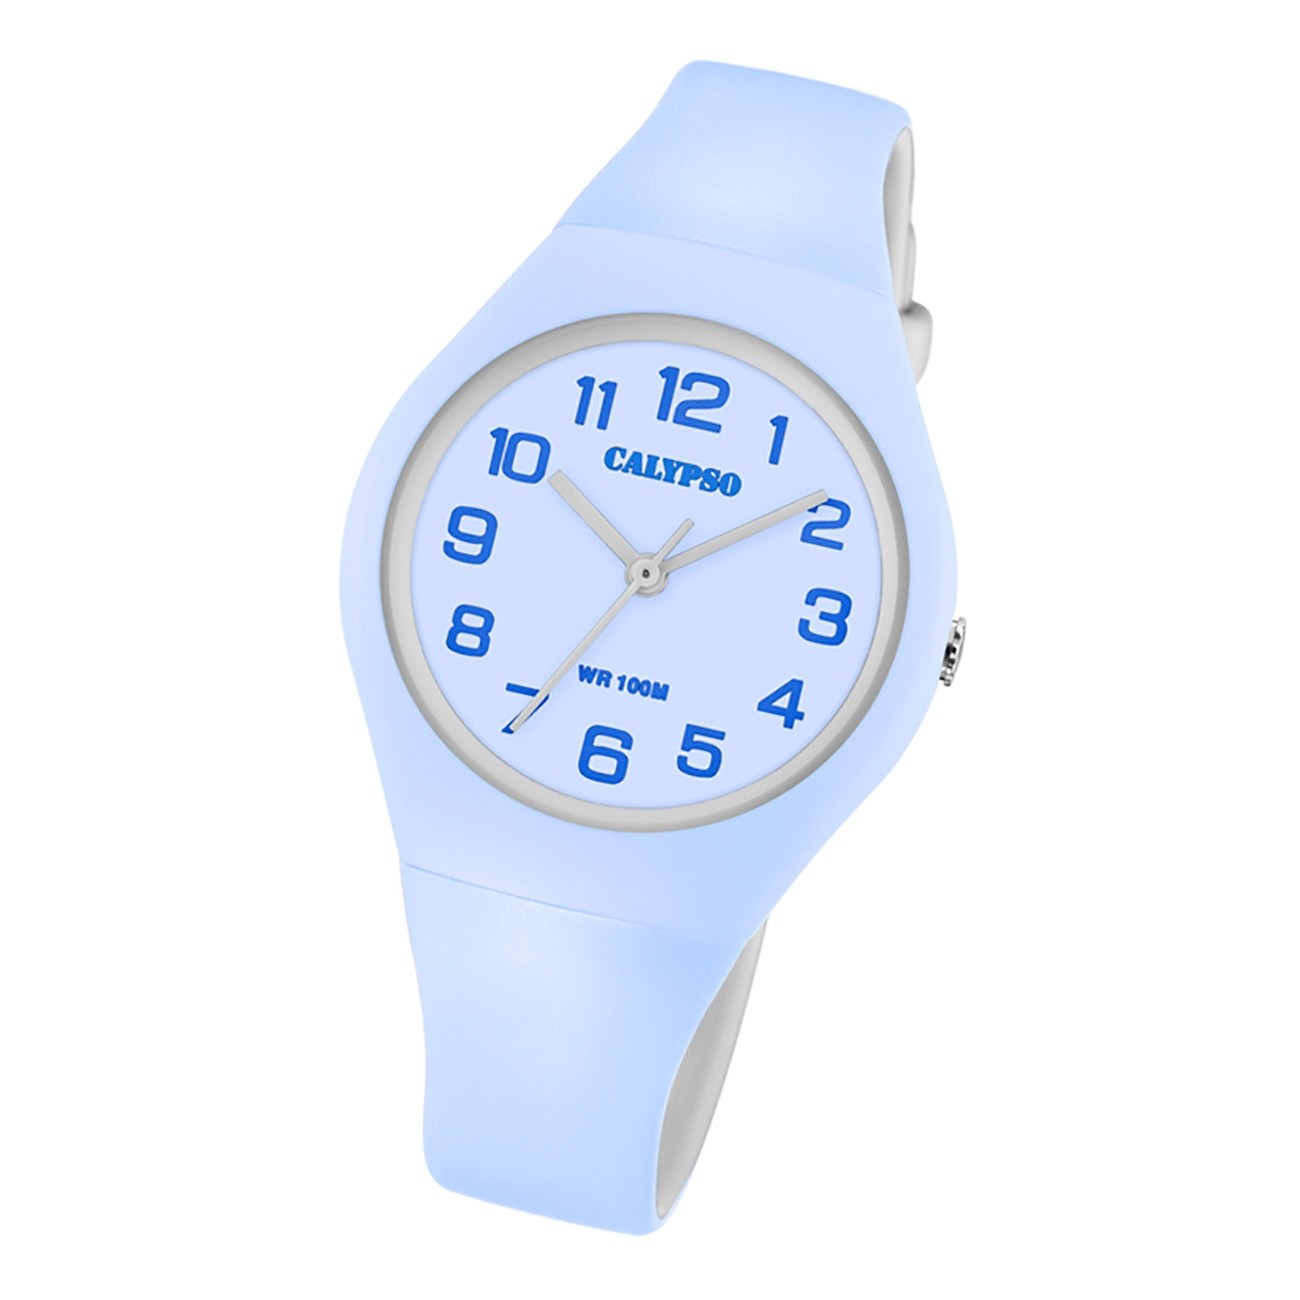 Calypso Damen Jugend Armbanduhr K5777/2 Analog Kunststoff hellblau UK5777/2